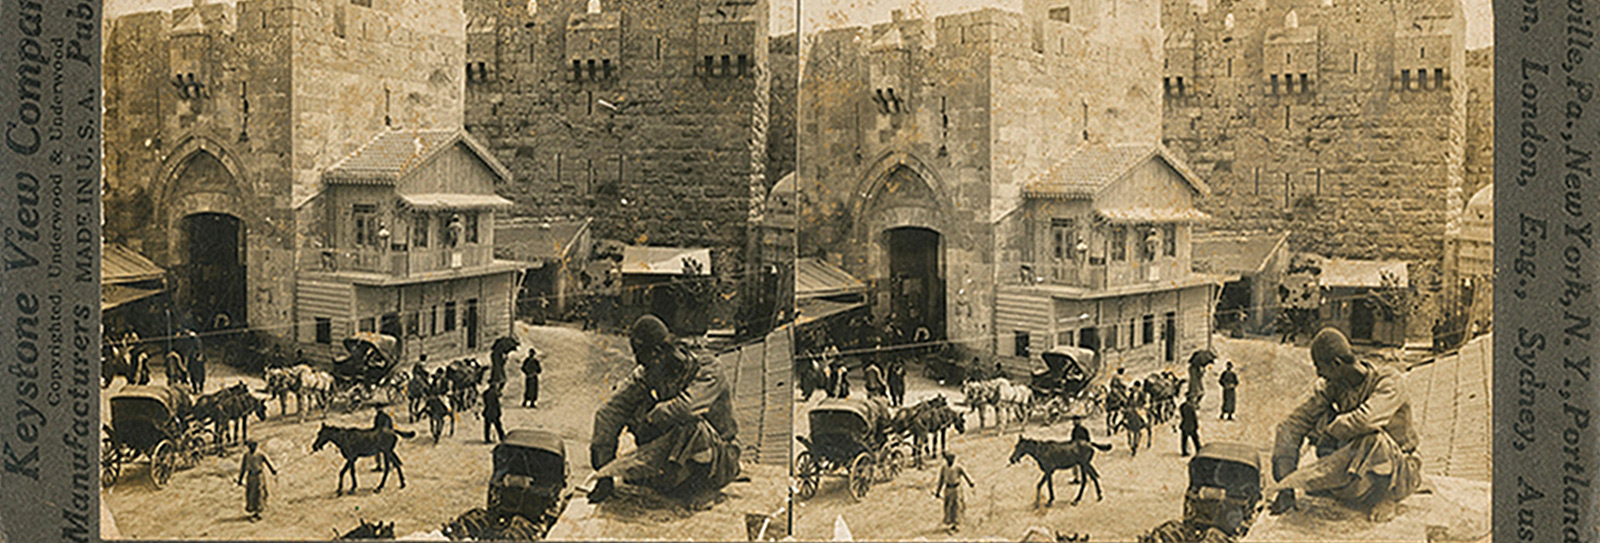 First Look: Jaffa Gate, Jerusalem